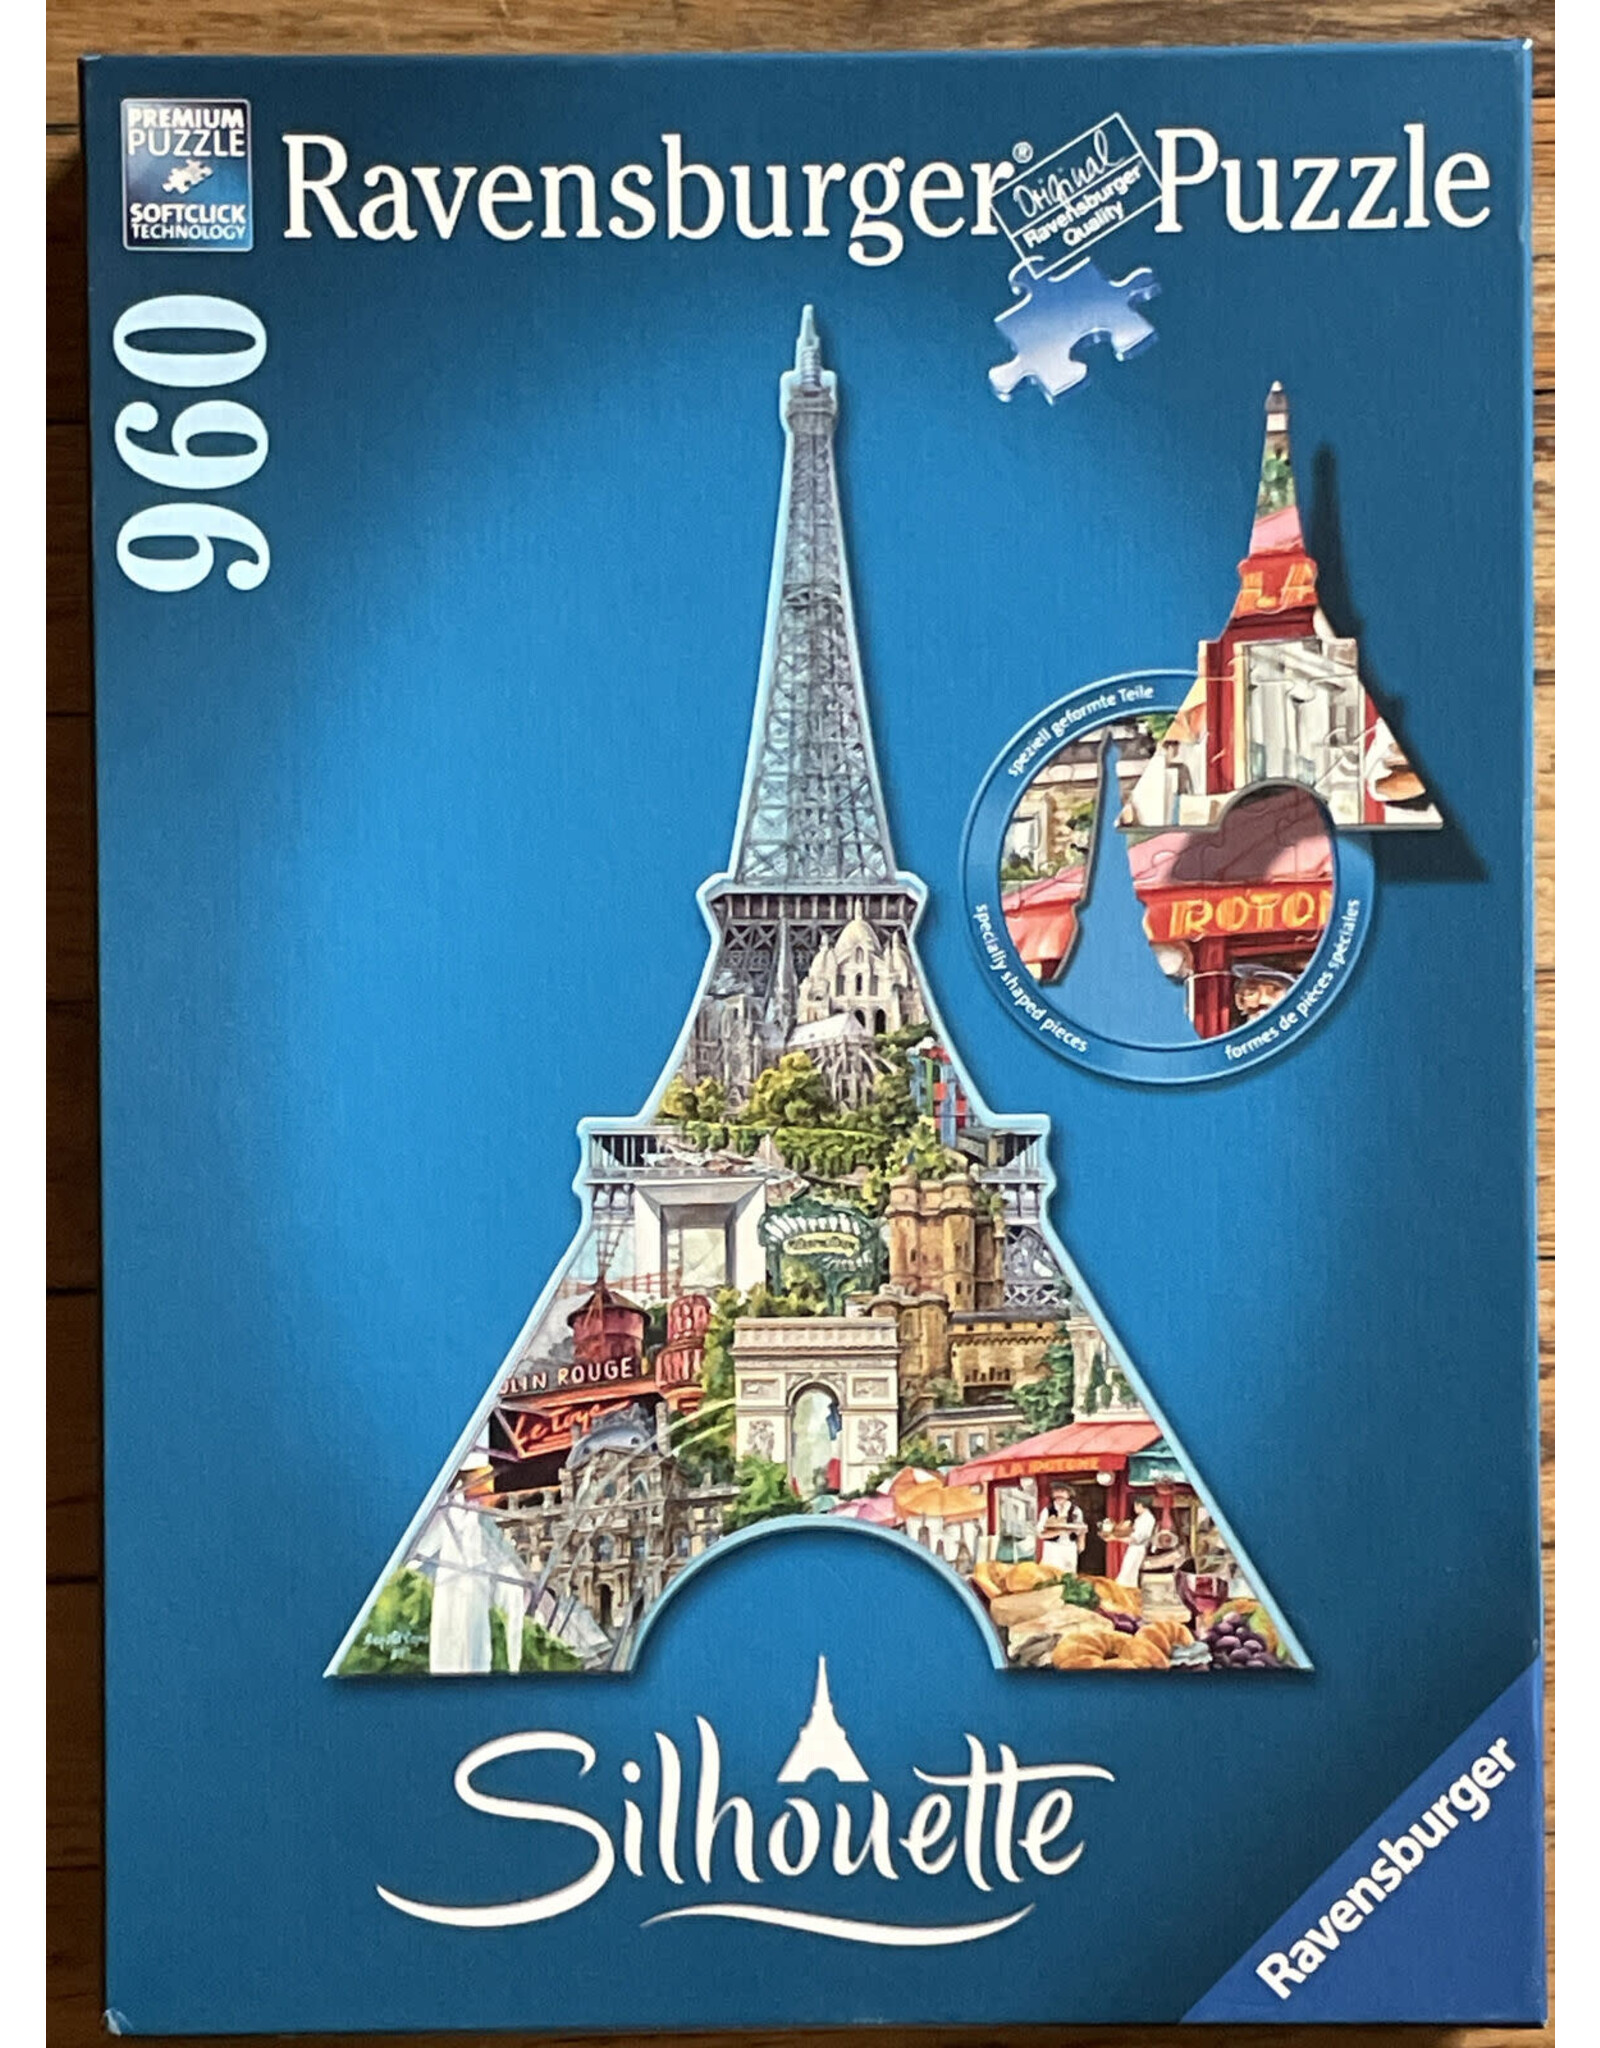 Ravensburger Ravensburger Puzzel 161522 Eiffeltoren, Parijs - Silhouette - 960 Stukjes